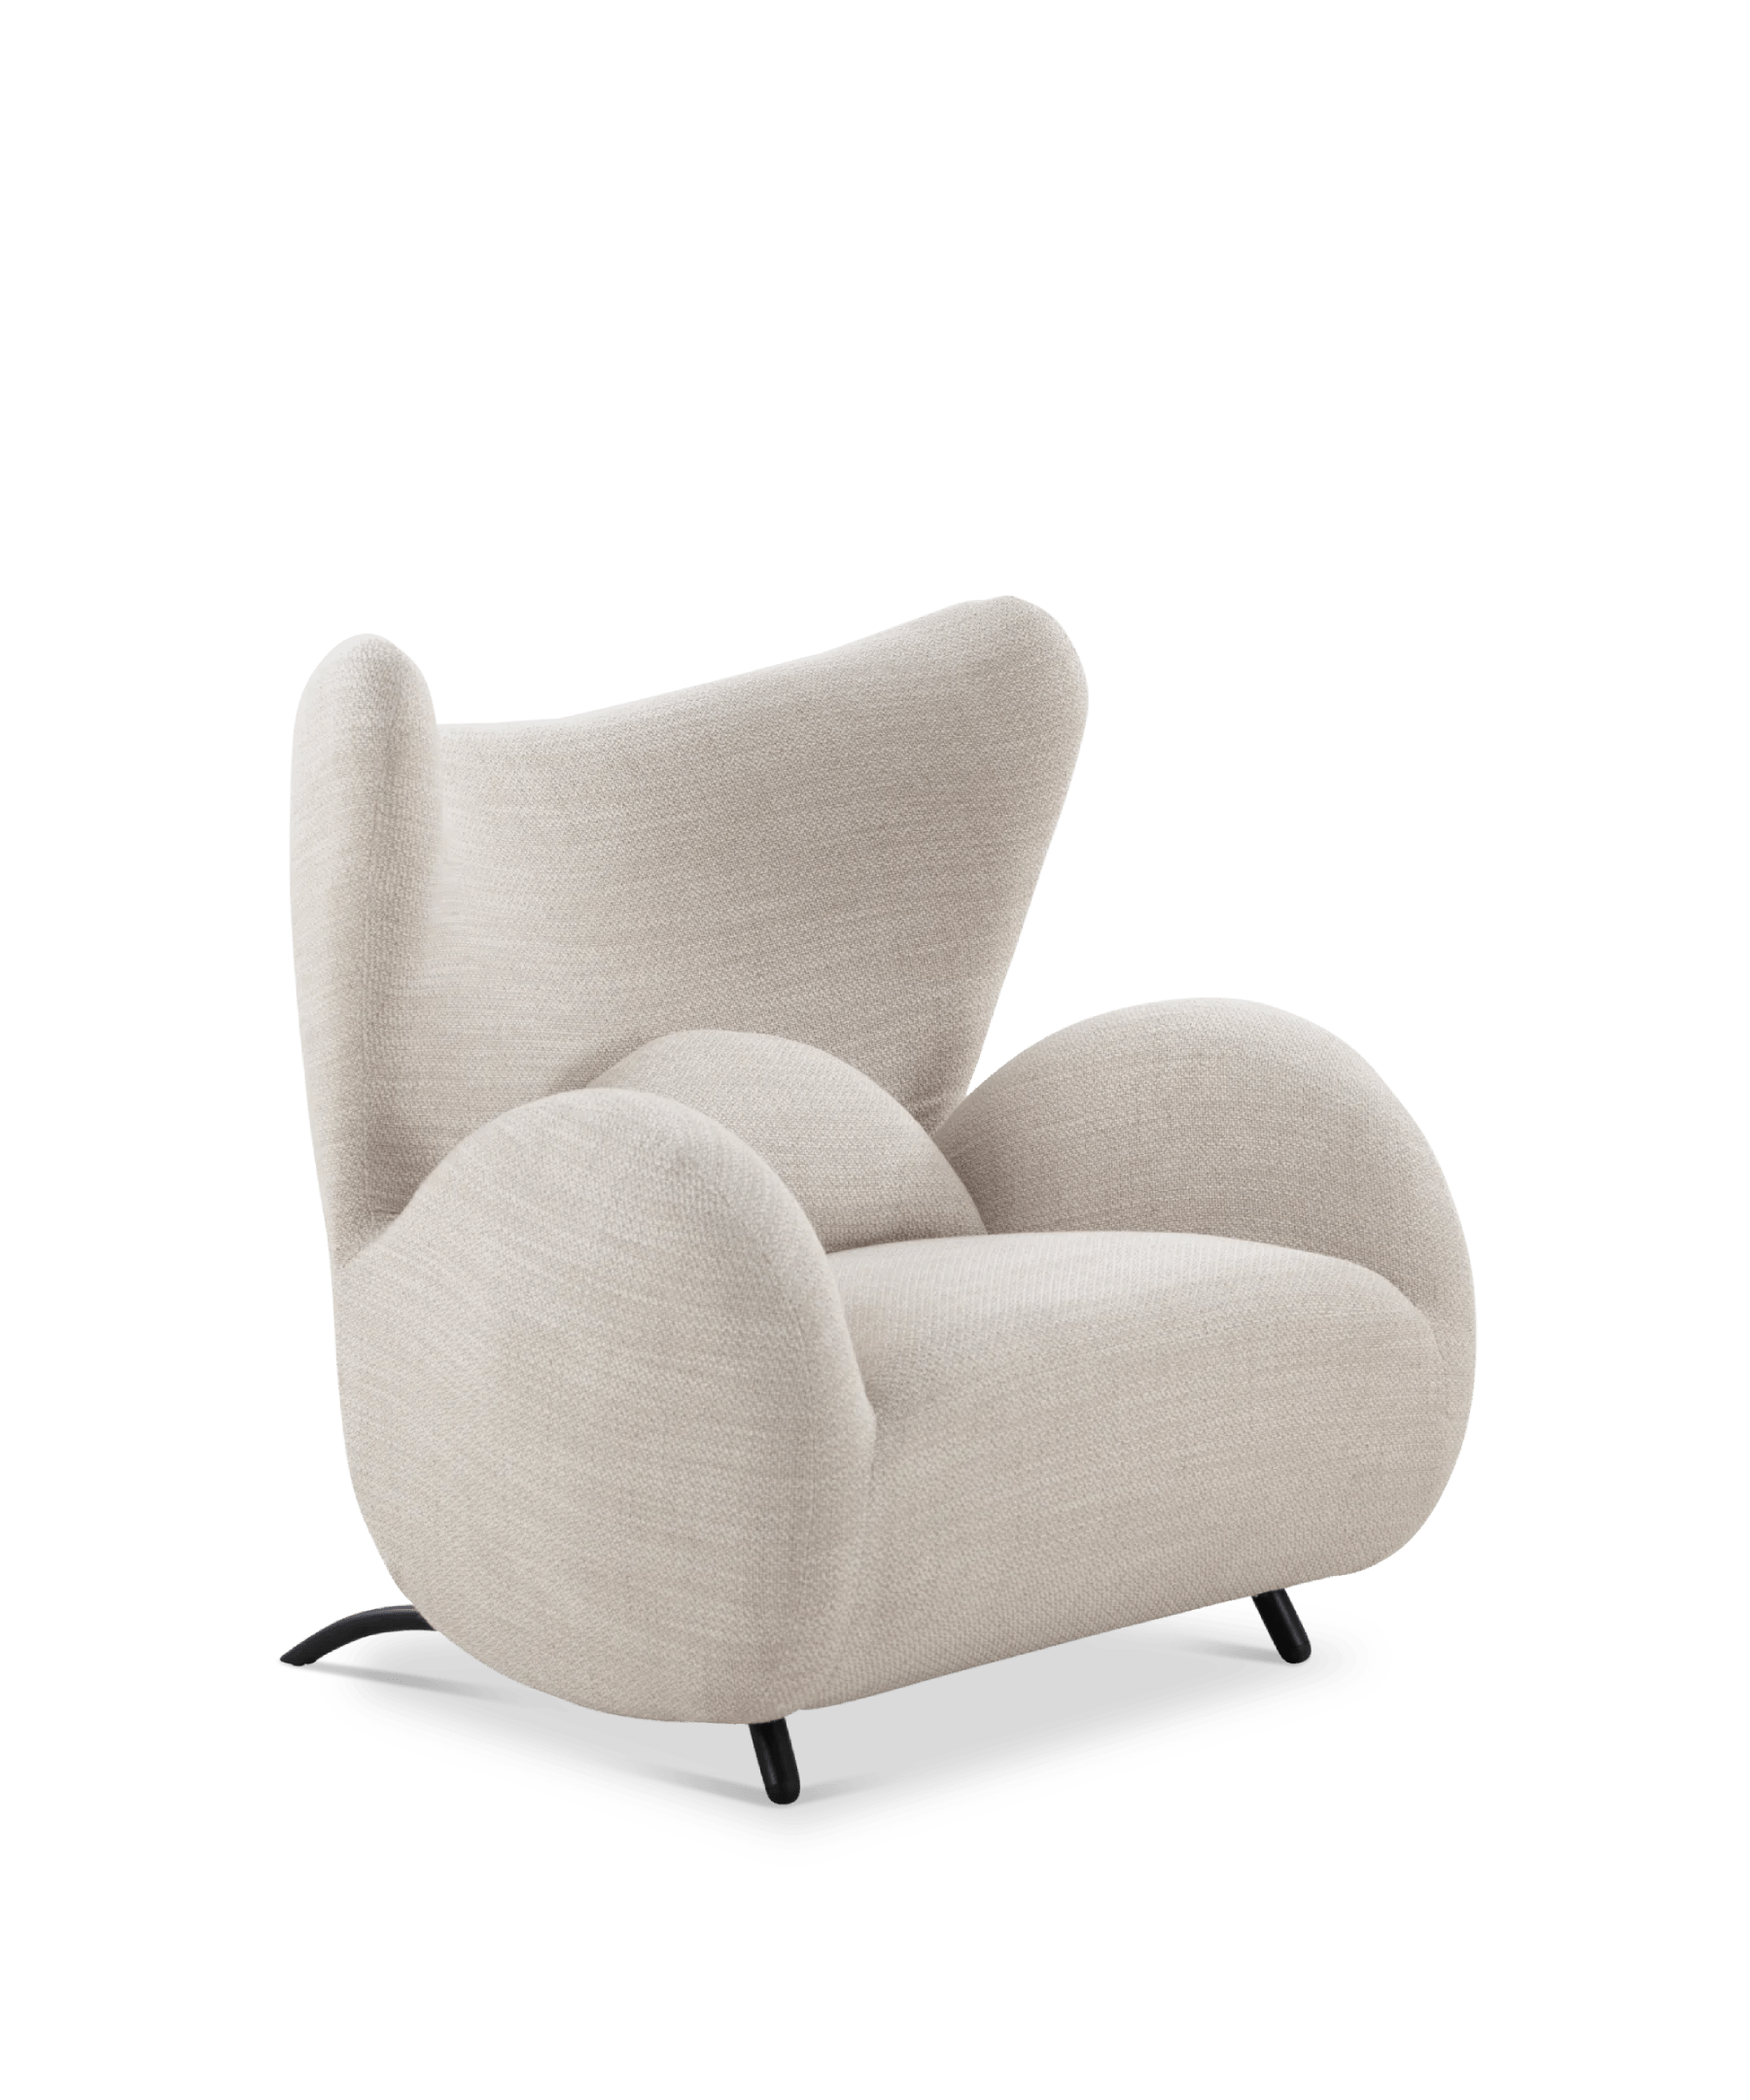 Big Buffalo armchair, cream colored boucle